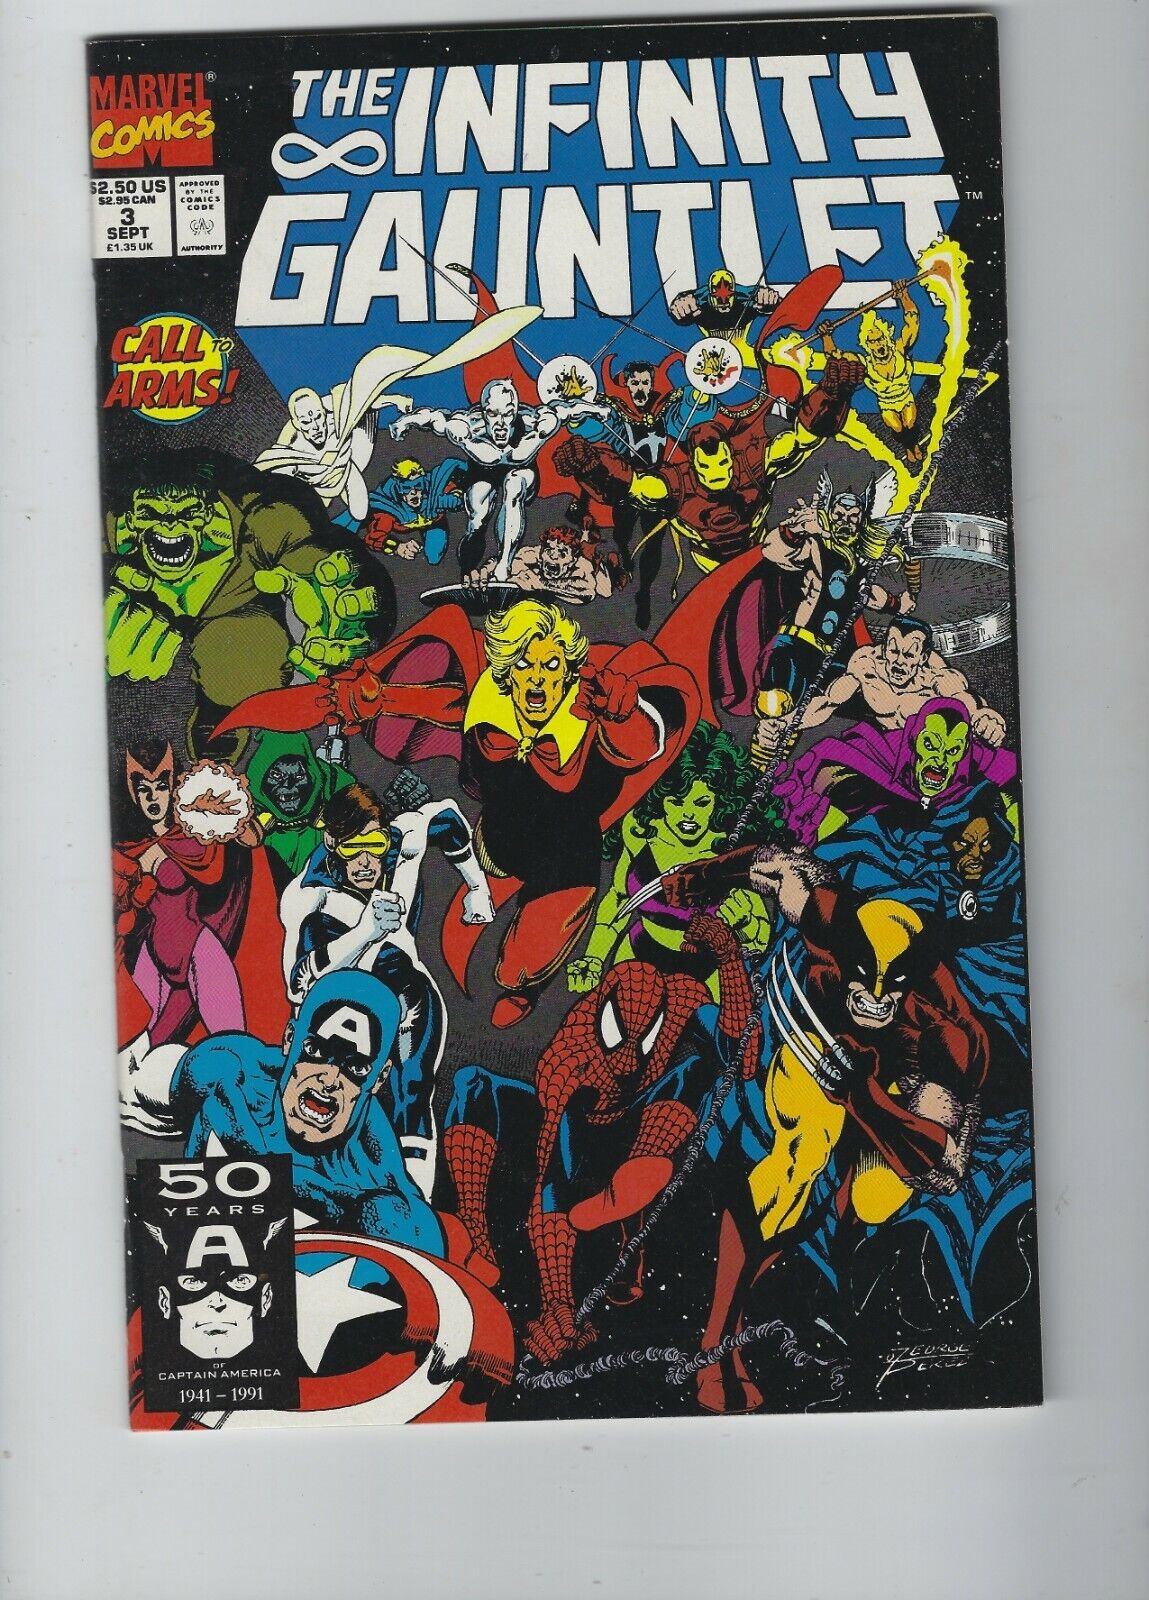 Infinity Gauntlet #3 Sept 1991 Thanos vs Everyone Mint Condition Grades 9.5